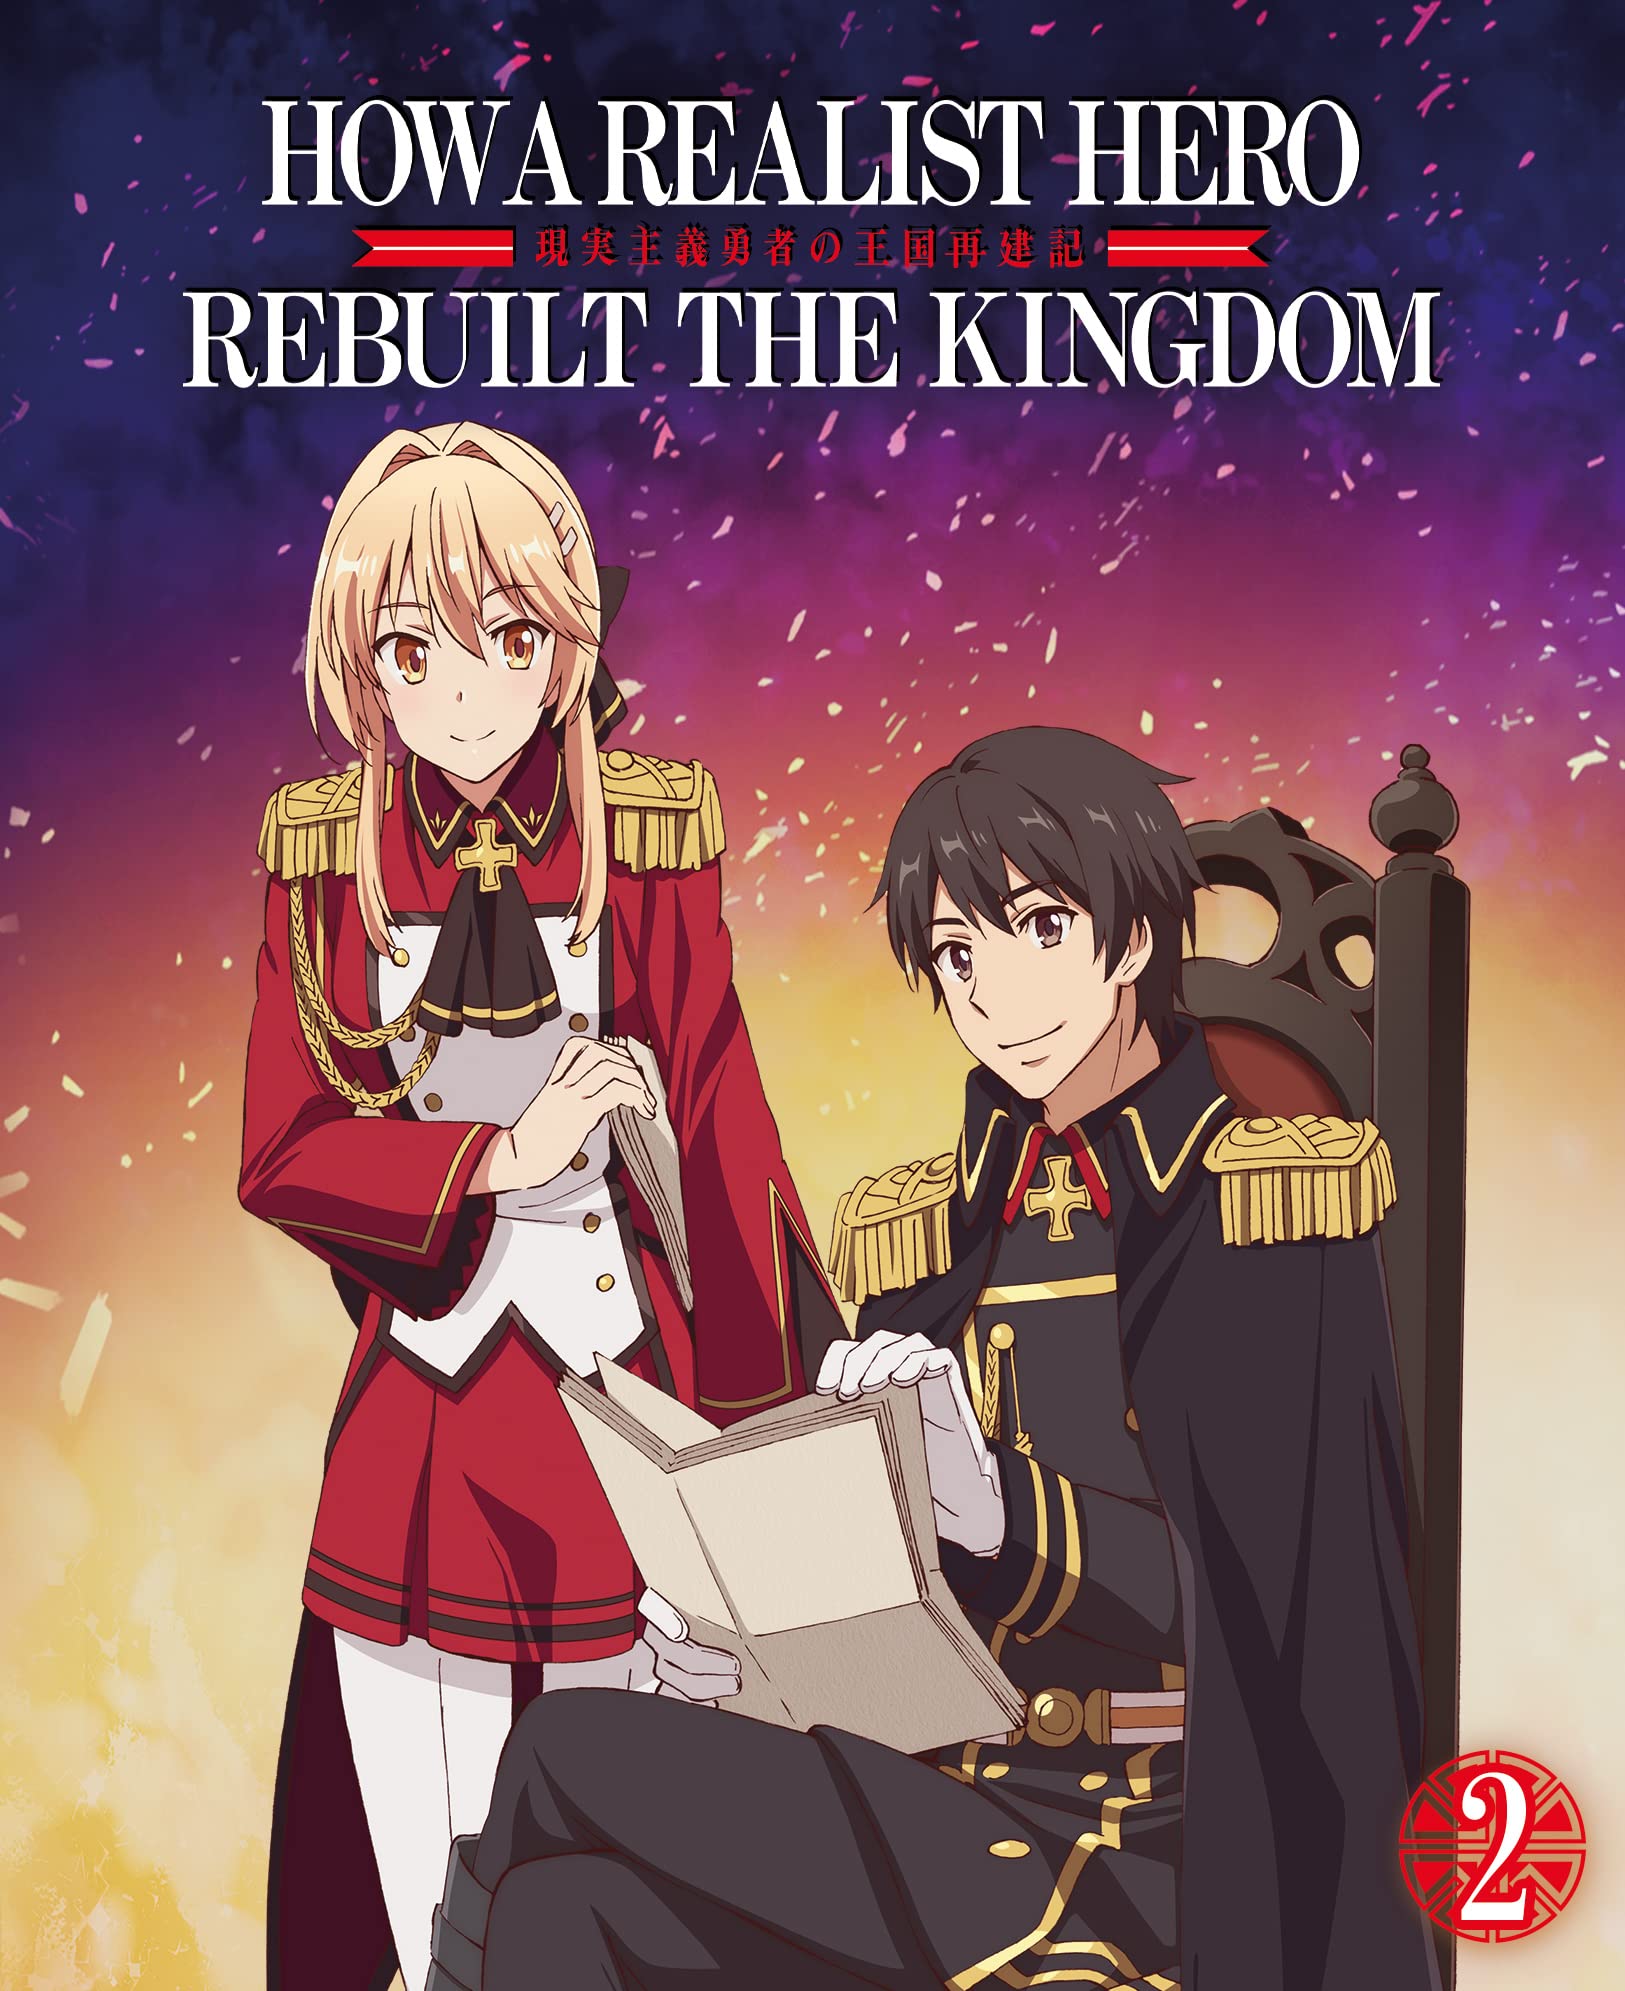 How a Realist Hero Rebuilt the Kingdom - Vol. 2 mit Lentikularkarte LTD.